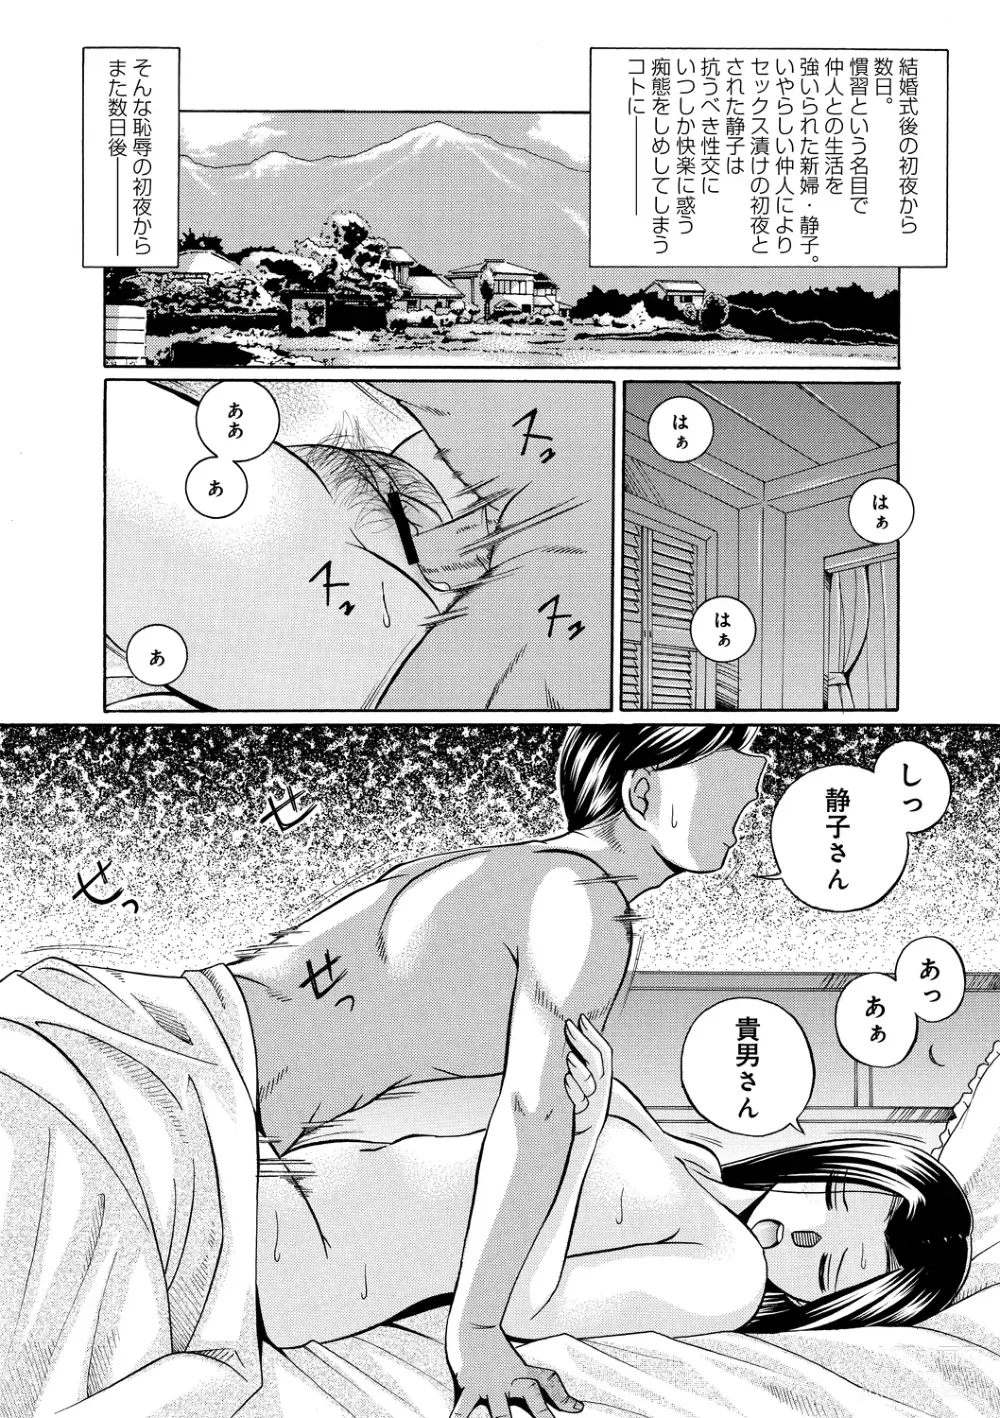 Page 163 of manga Jokyoushi Kyouko ~Kairaku Choukyoushitsu~